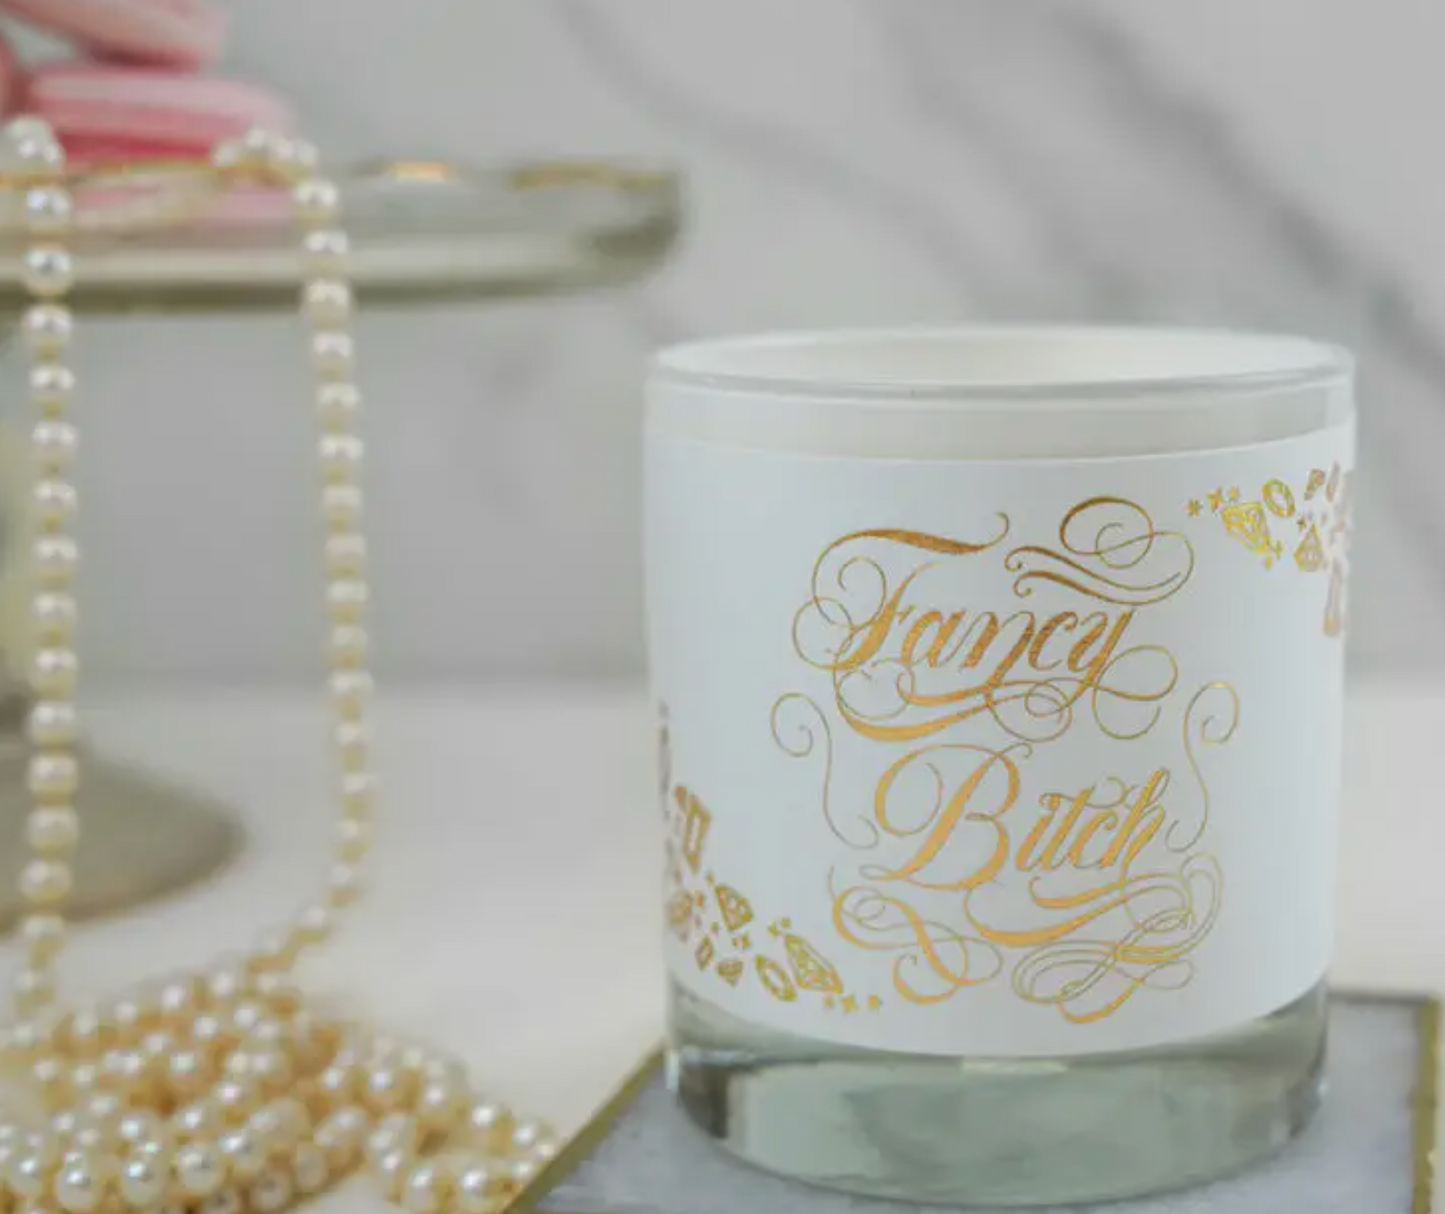 Fancy Bitch Luxury Candle